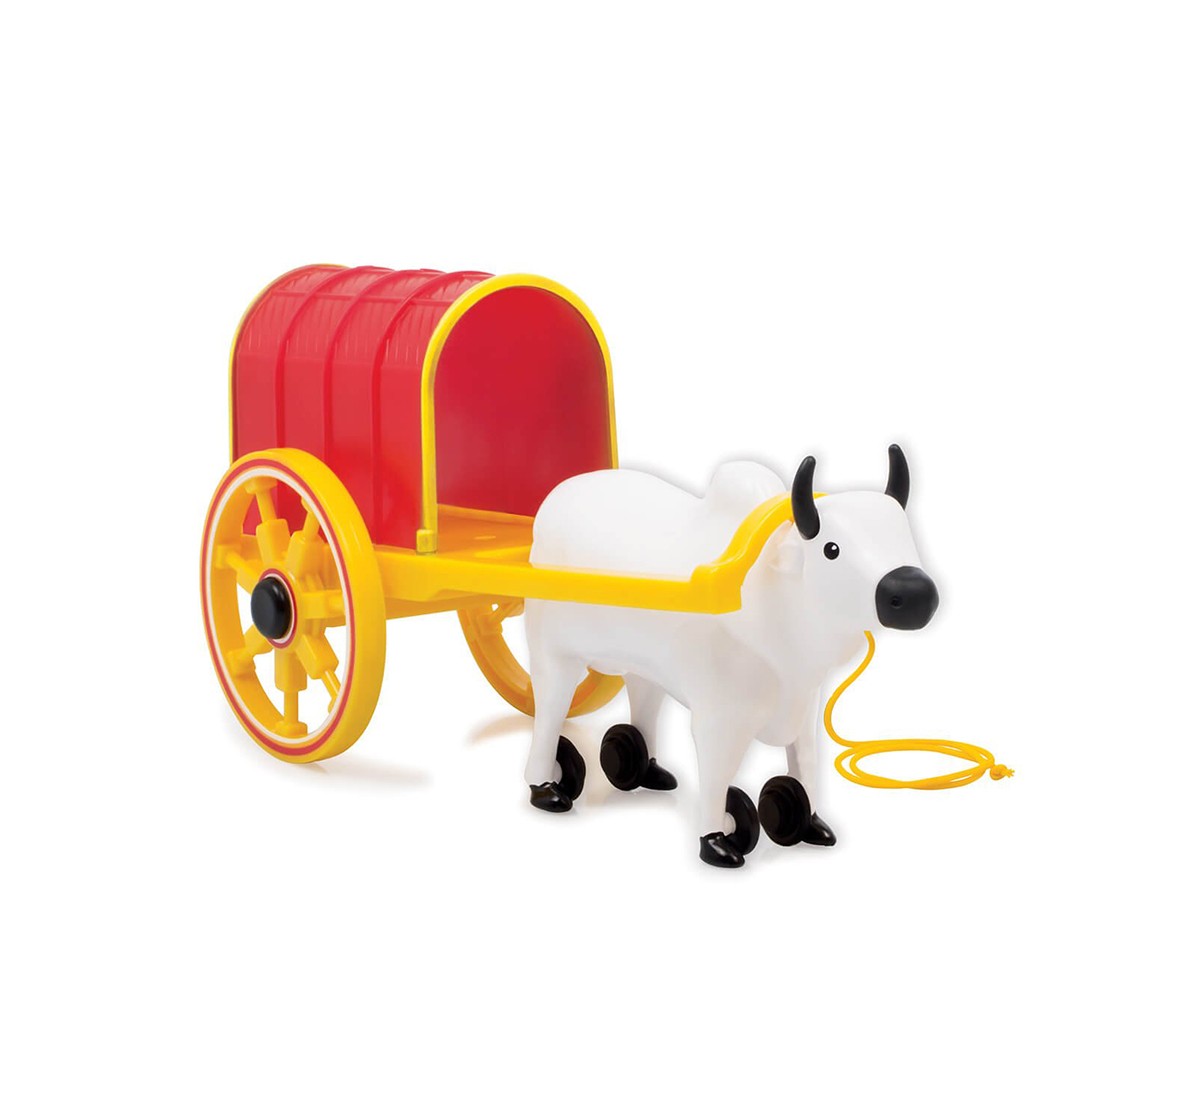  Funskool Bullock Cart Activity Toys for Kids age 12M+ 